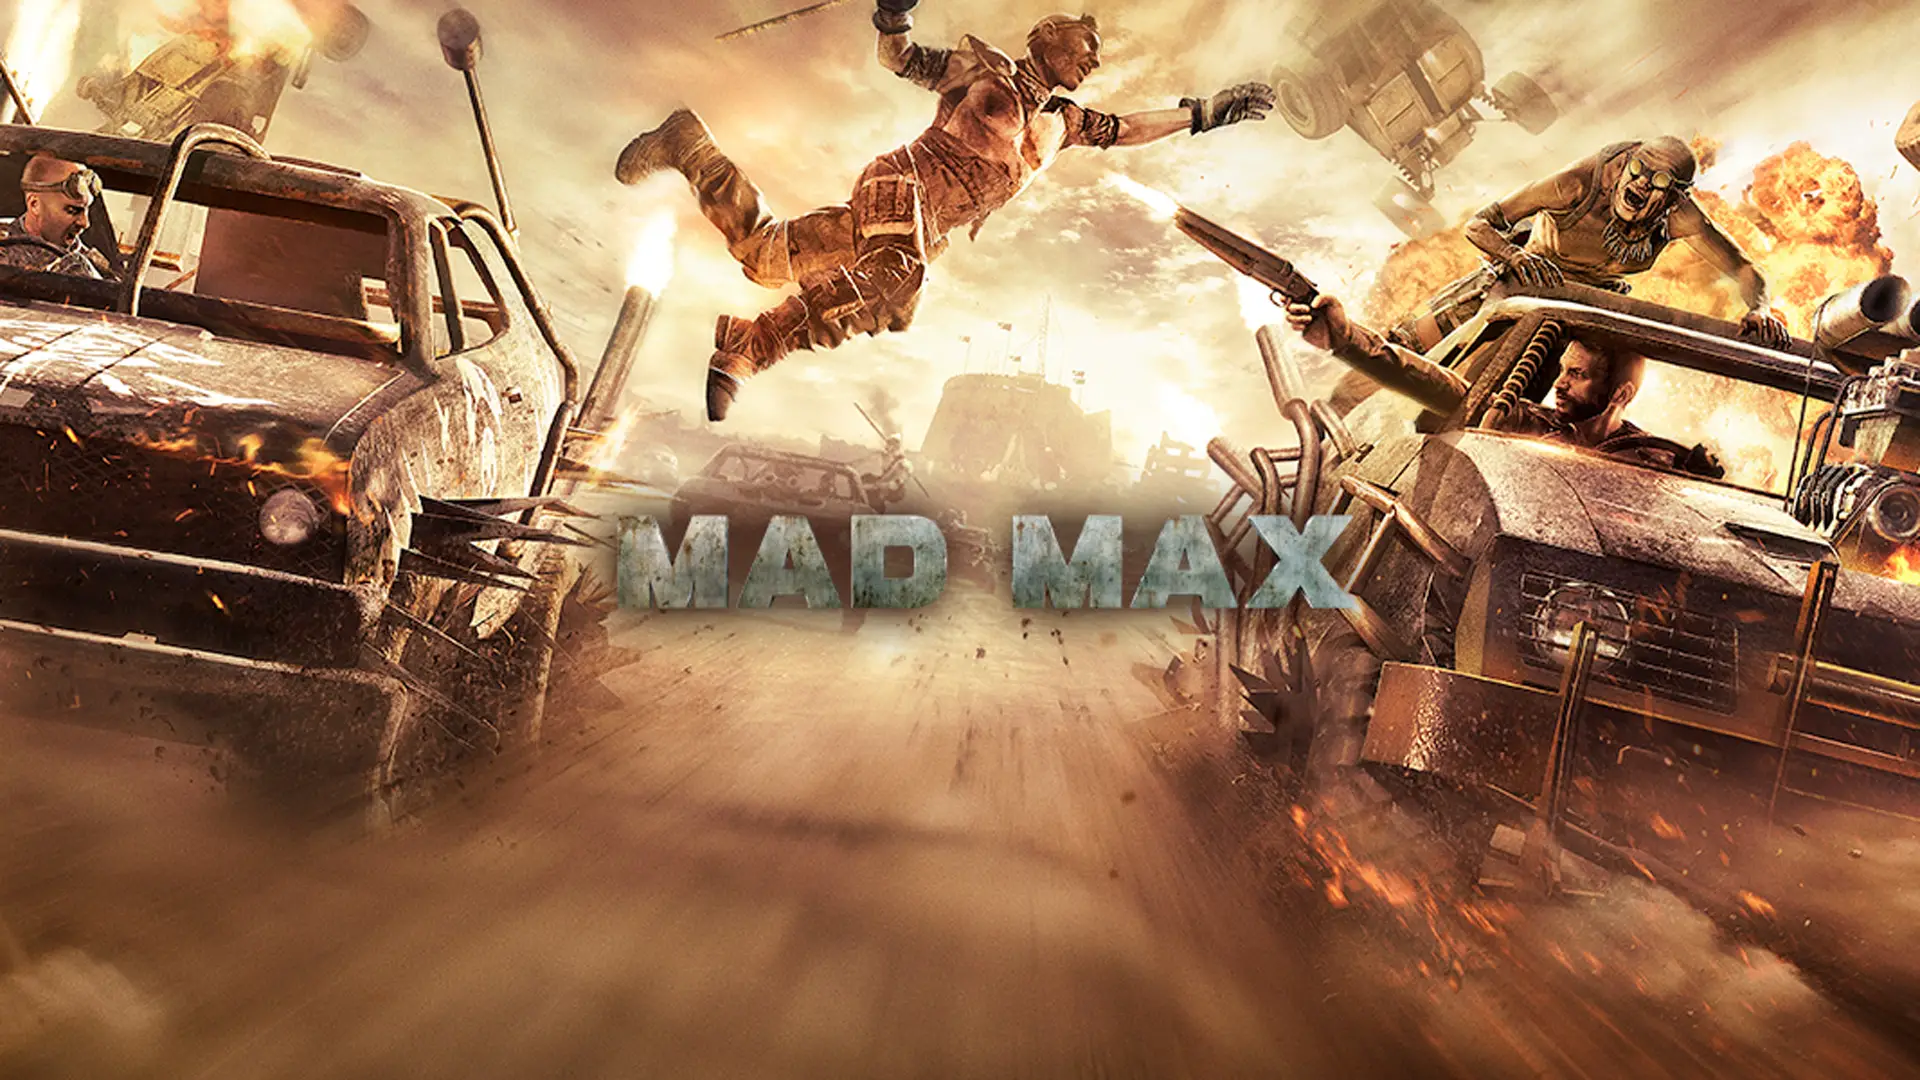 Max Games